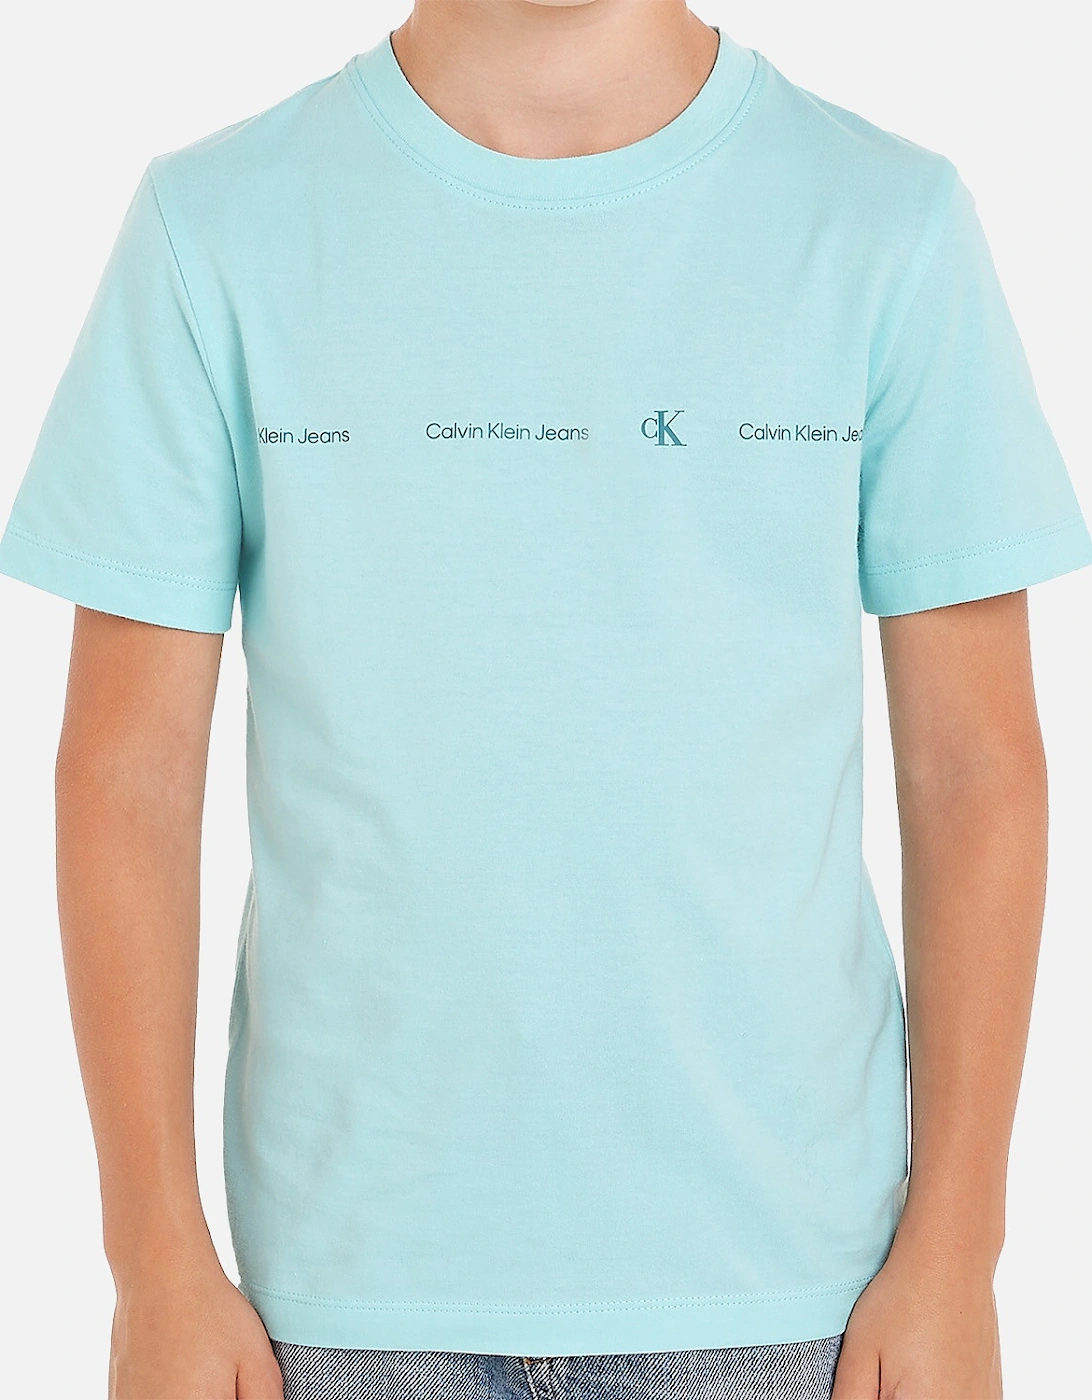 Juniors Minimalistic T-Shirt (Turquoise)